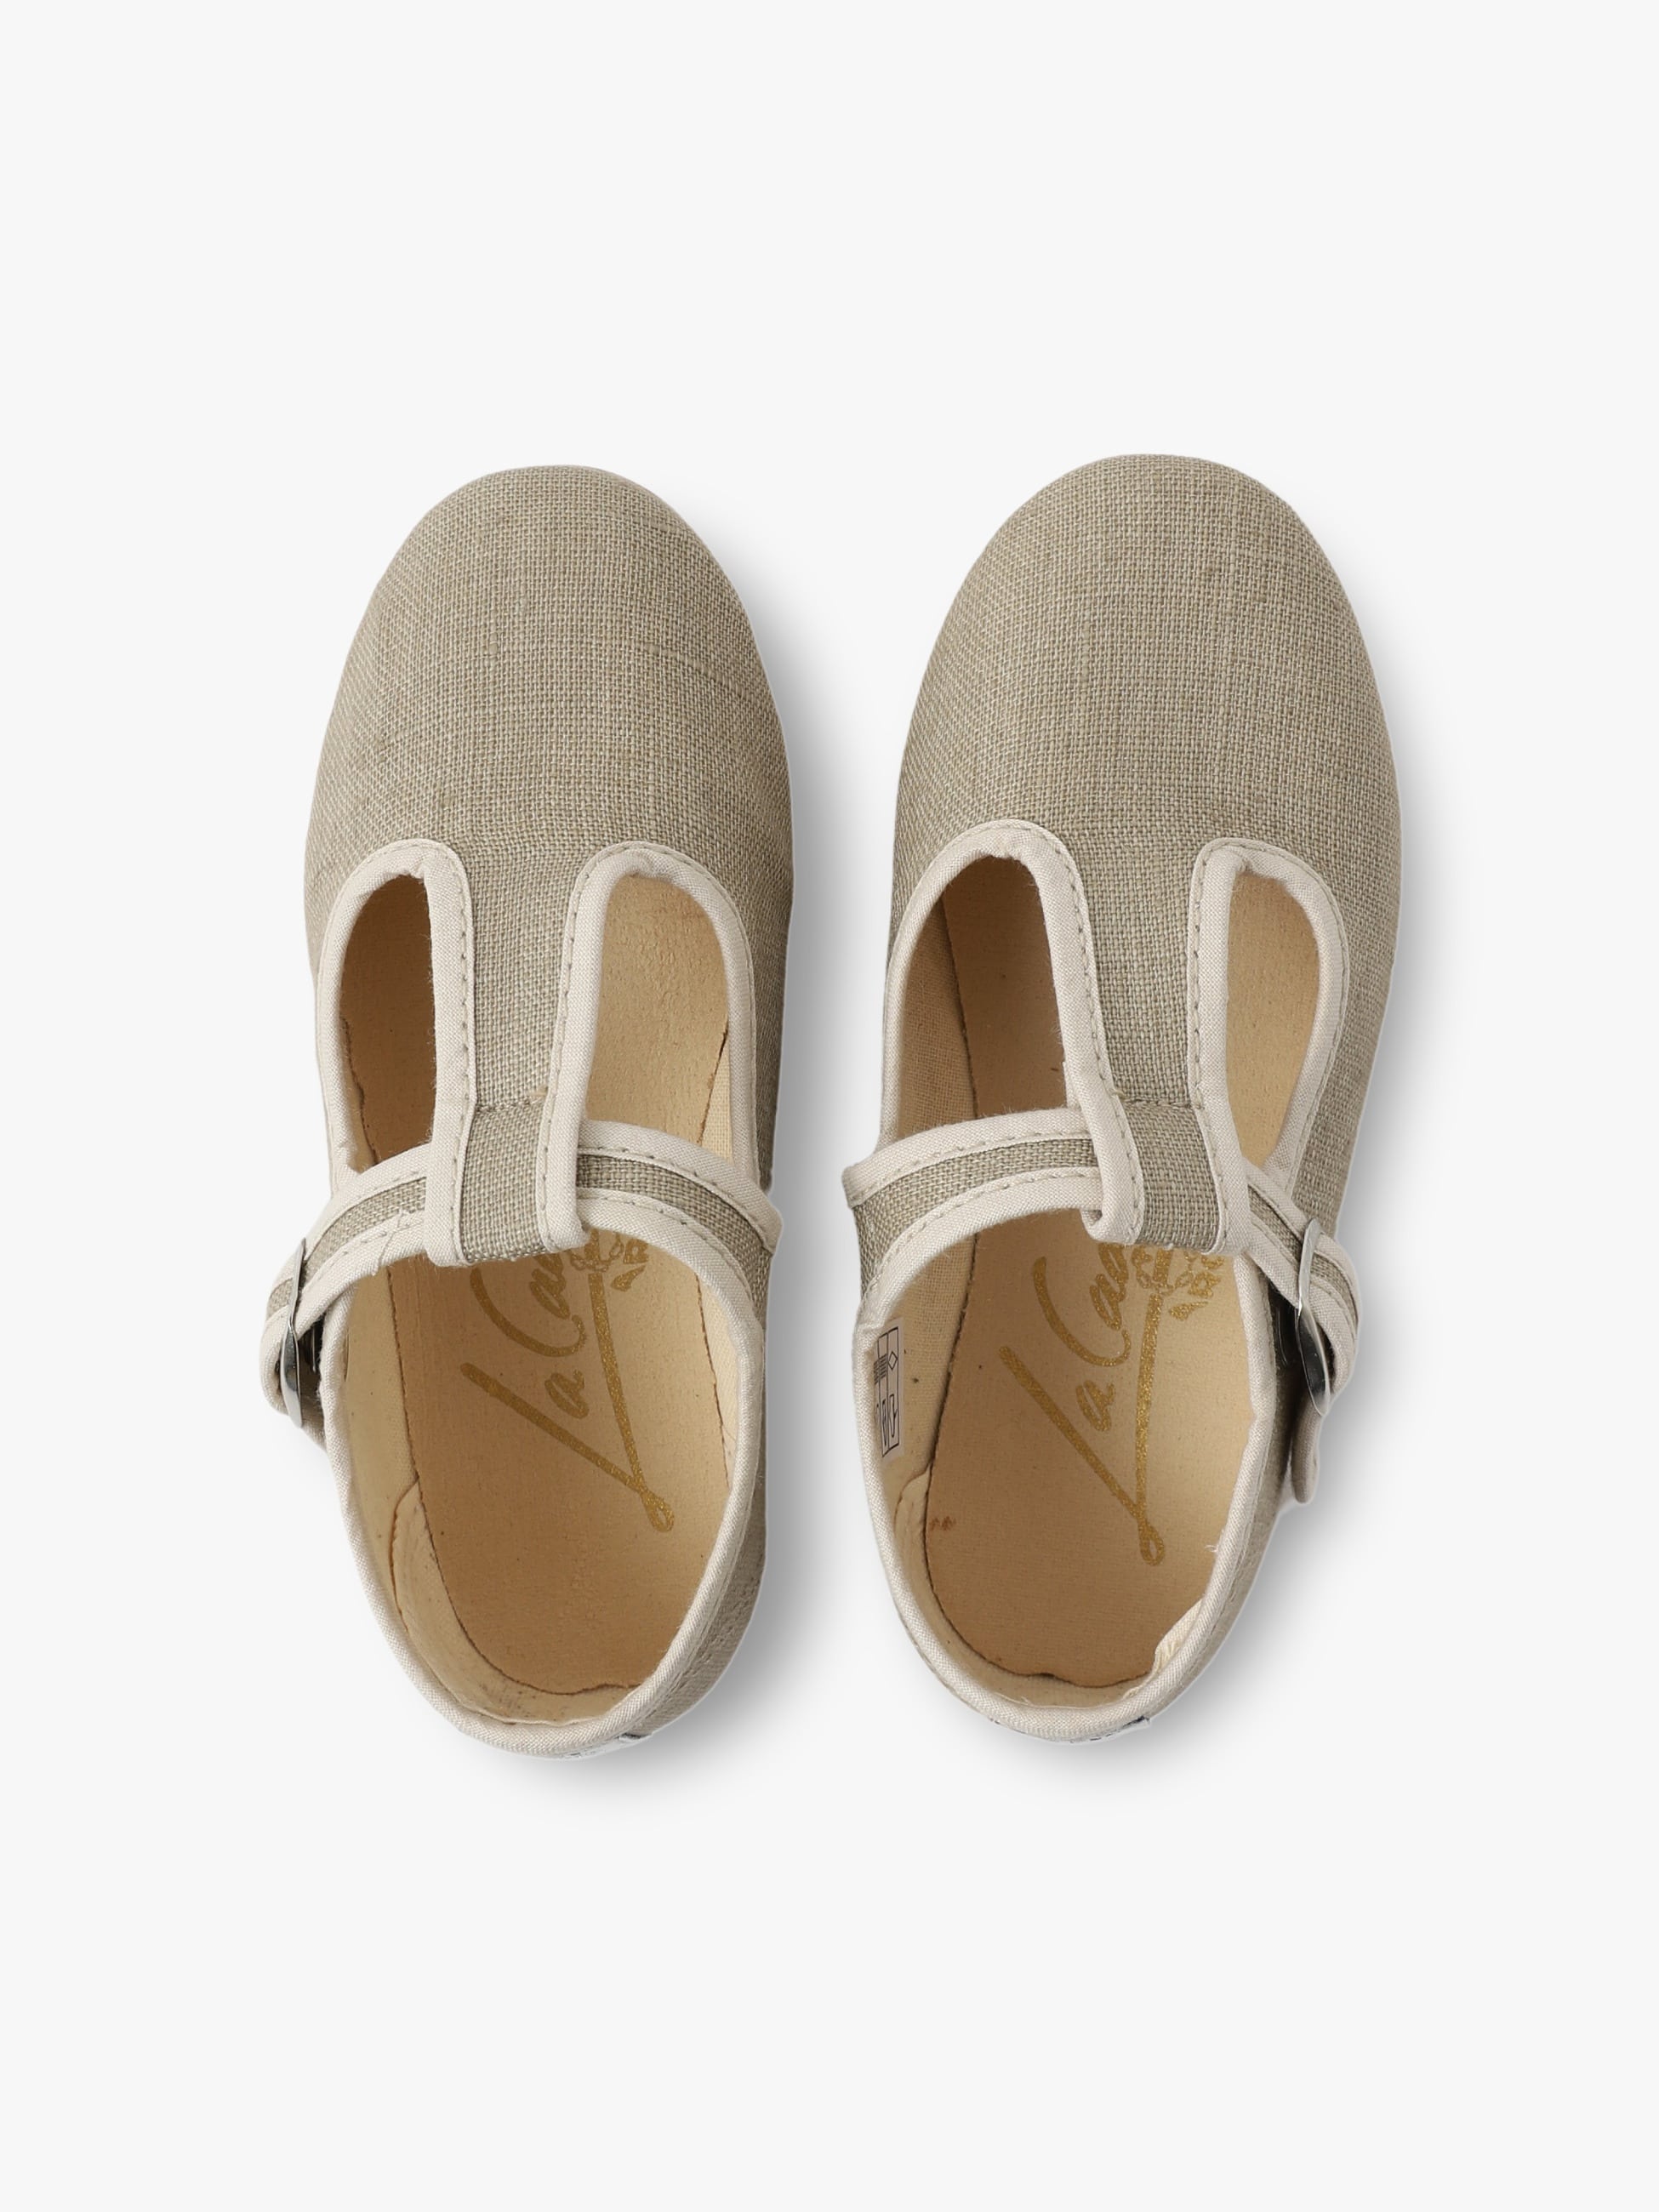 Trim Piping Sandalia Alta T Strap Linen Shoes (kids/14-17cm) 詳細画像 beige 4